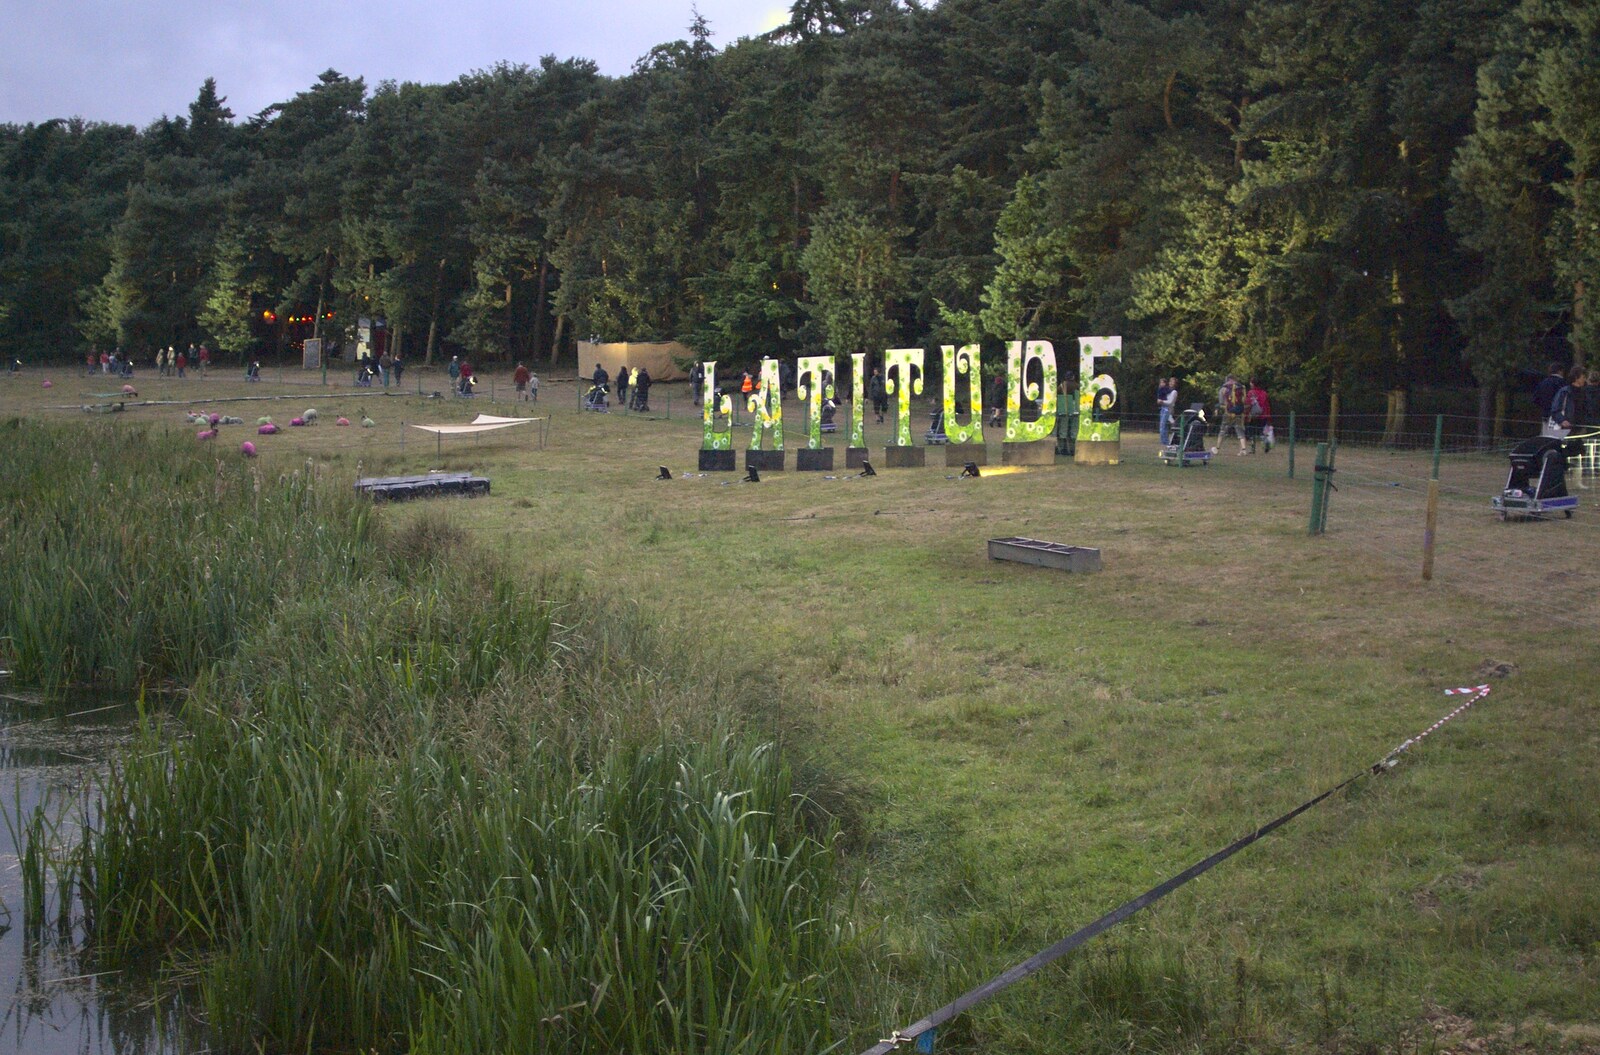 The Latitude sign from The Latitude Festival, Henham Park, Suffolk - 20th July 2009